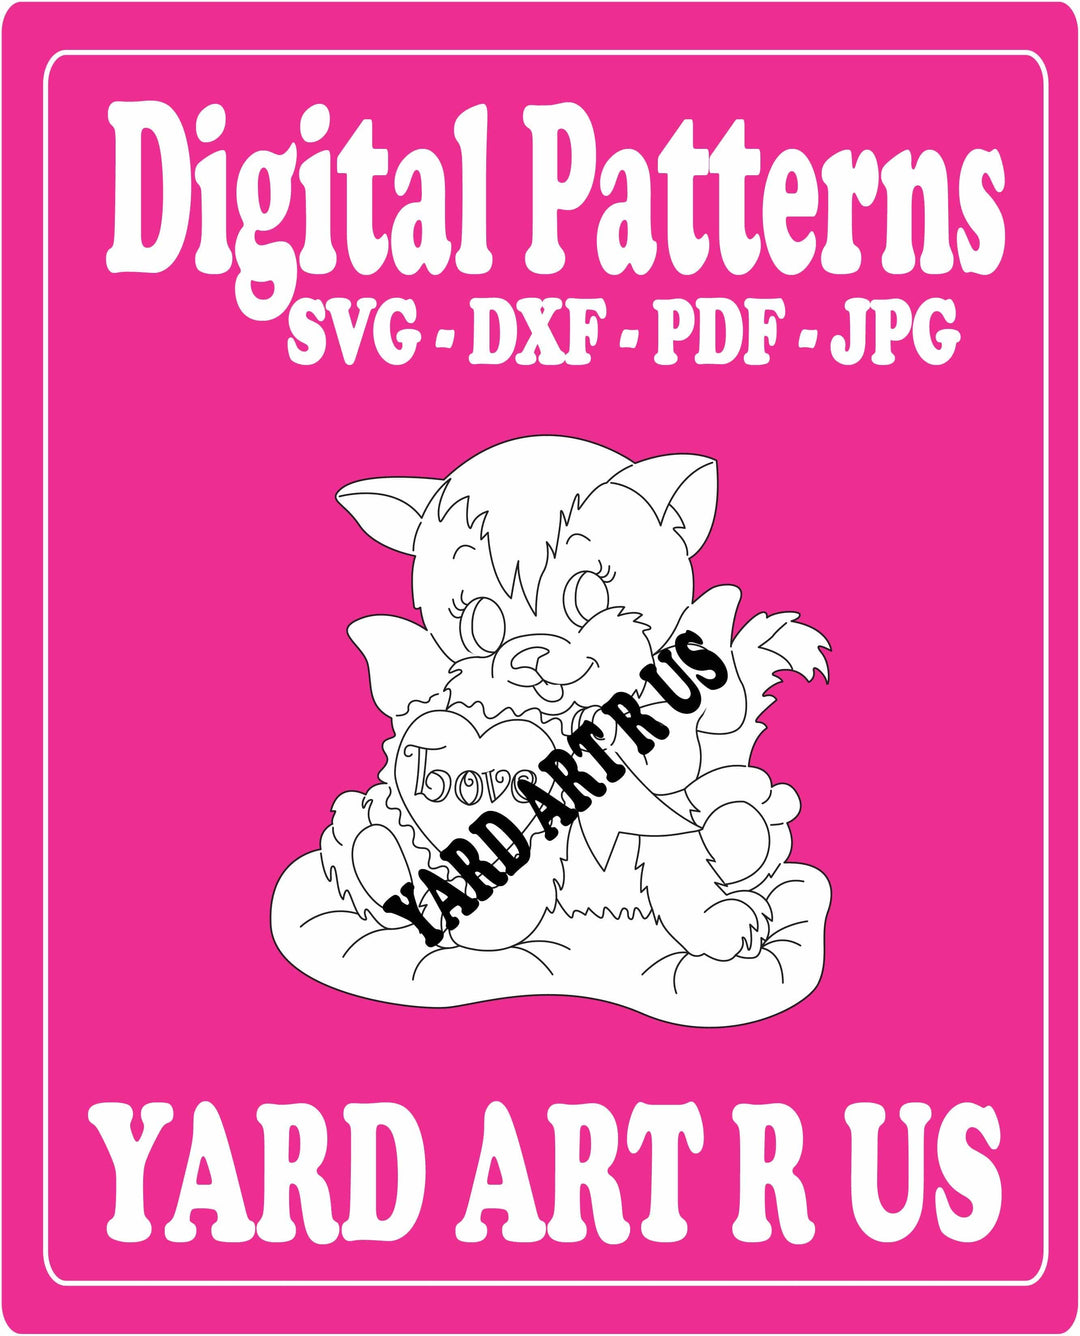 Cat valentine digital patterns; SVG, DXF, PDF, and JPG file options